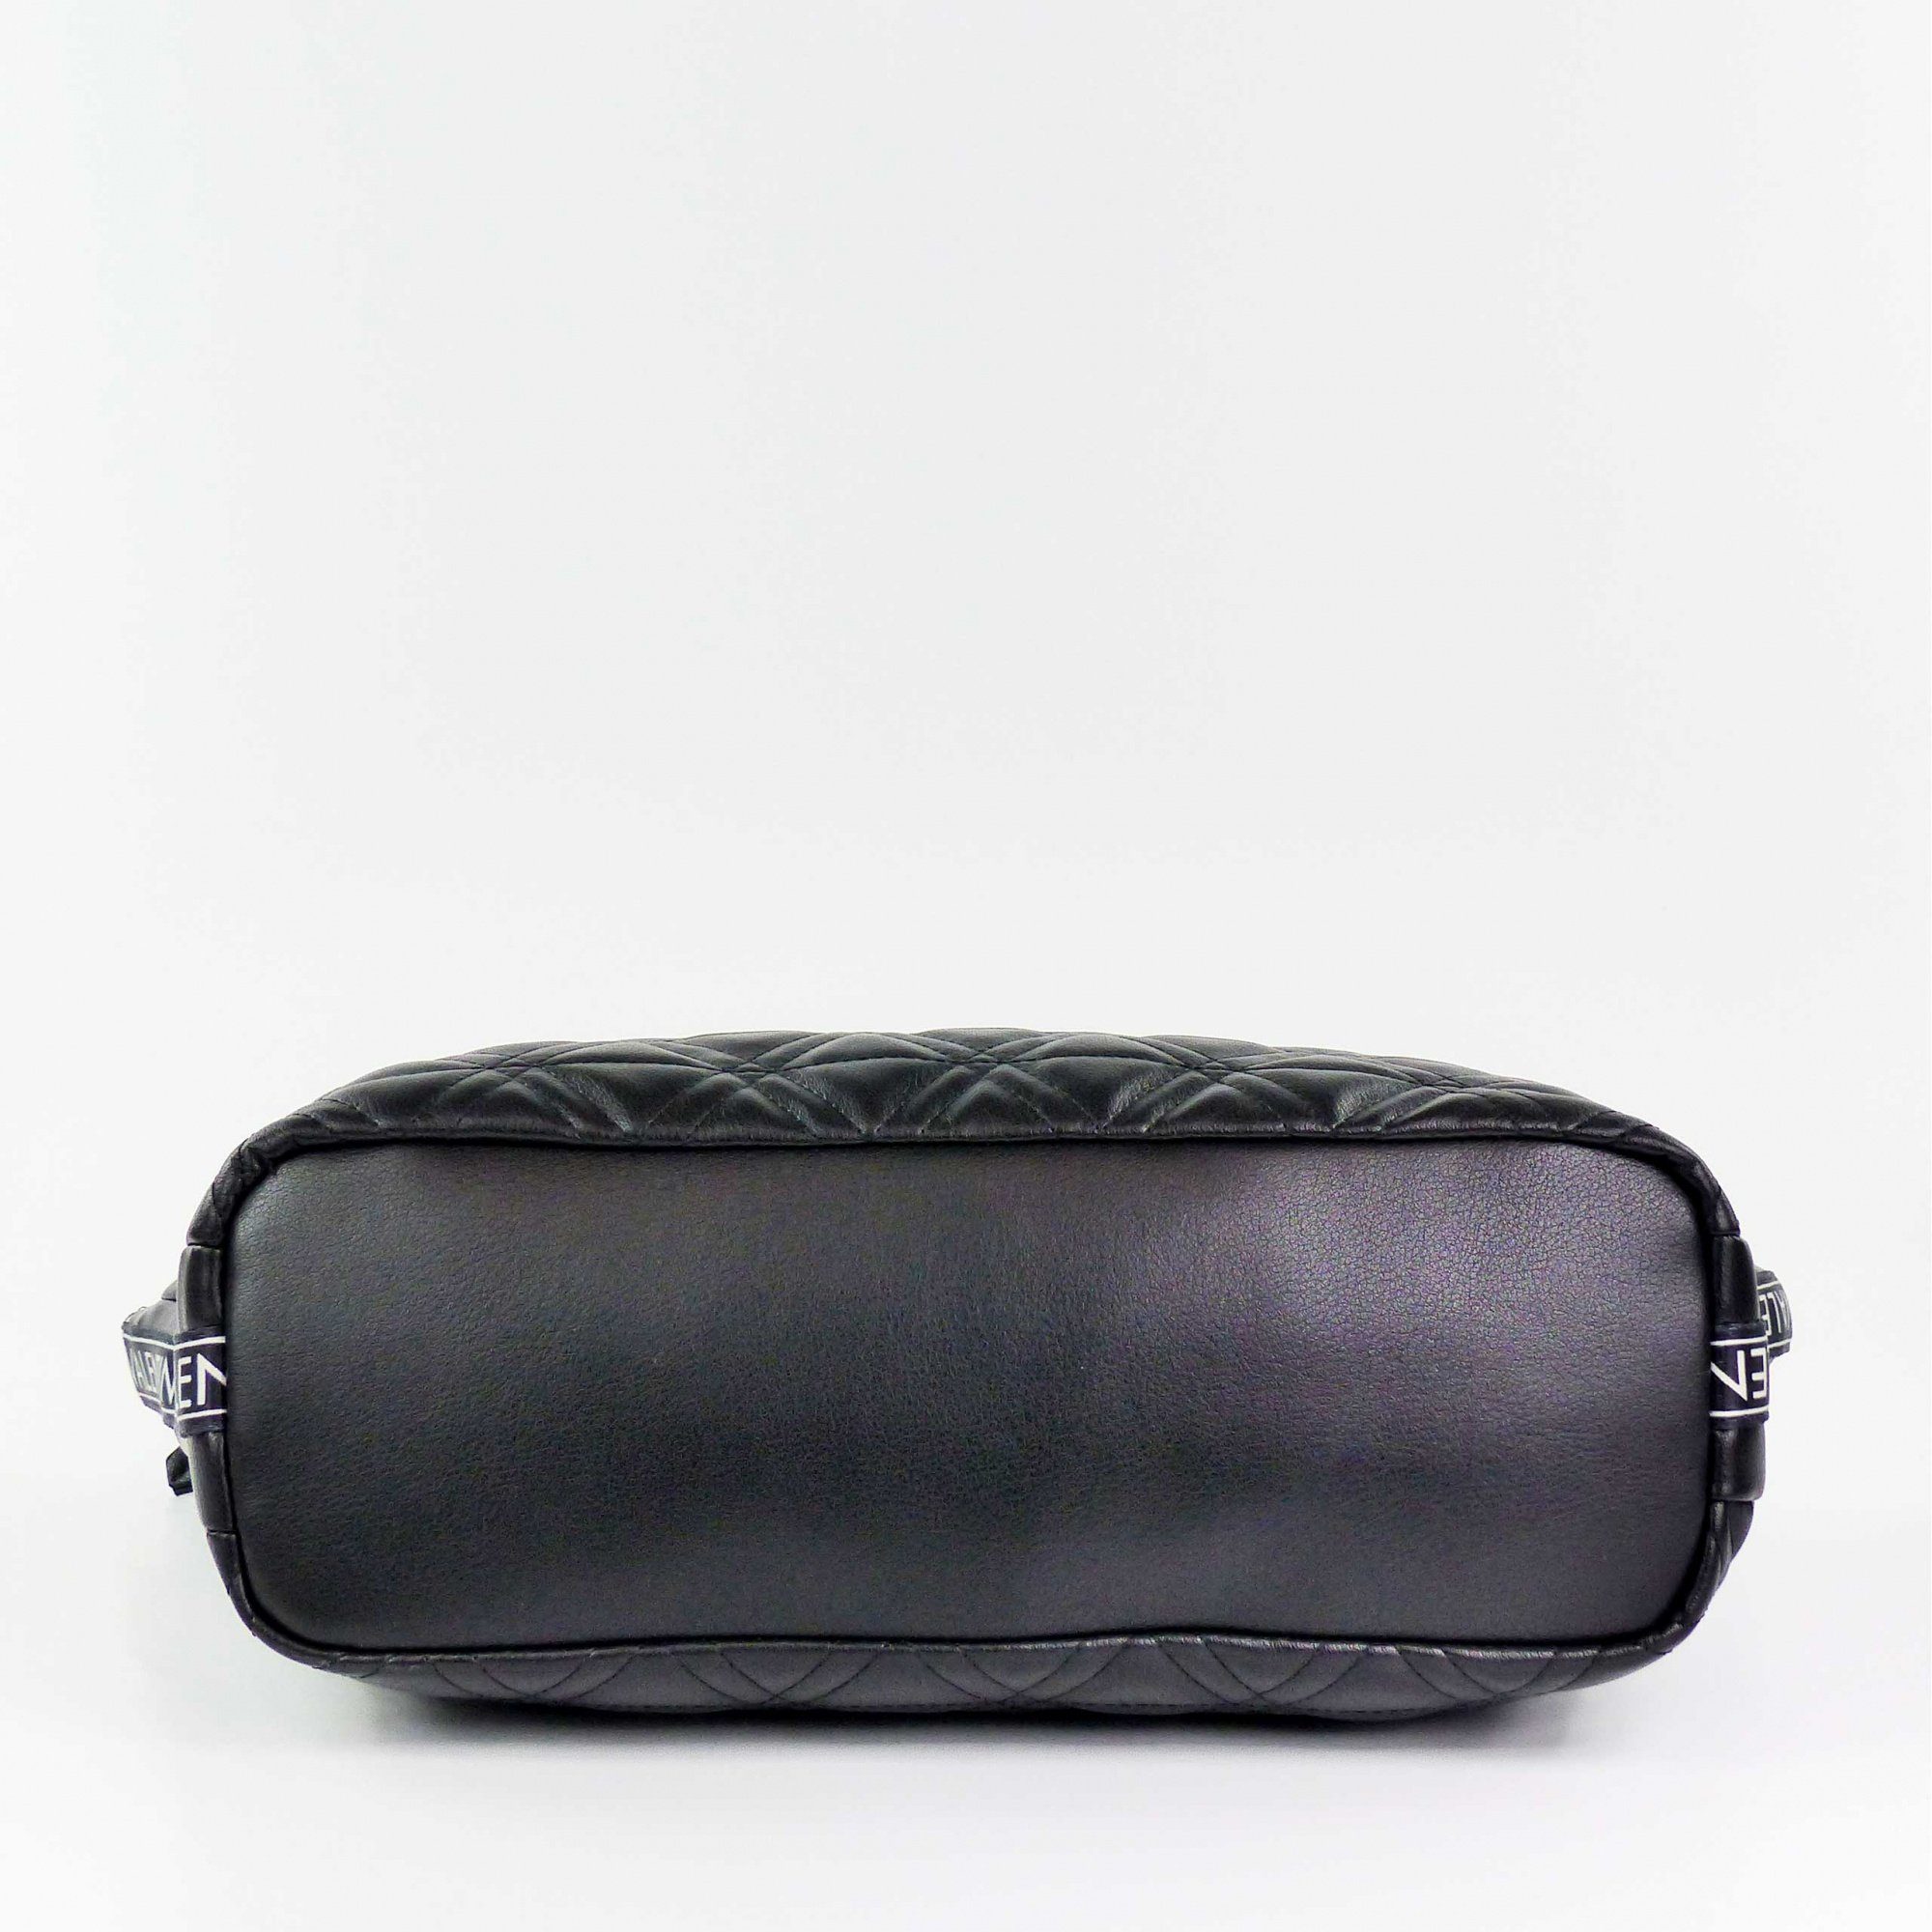 BAGS Palm Re VBS6V701-Nero VALENTINO Handtasche